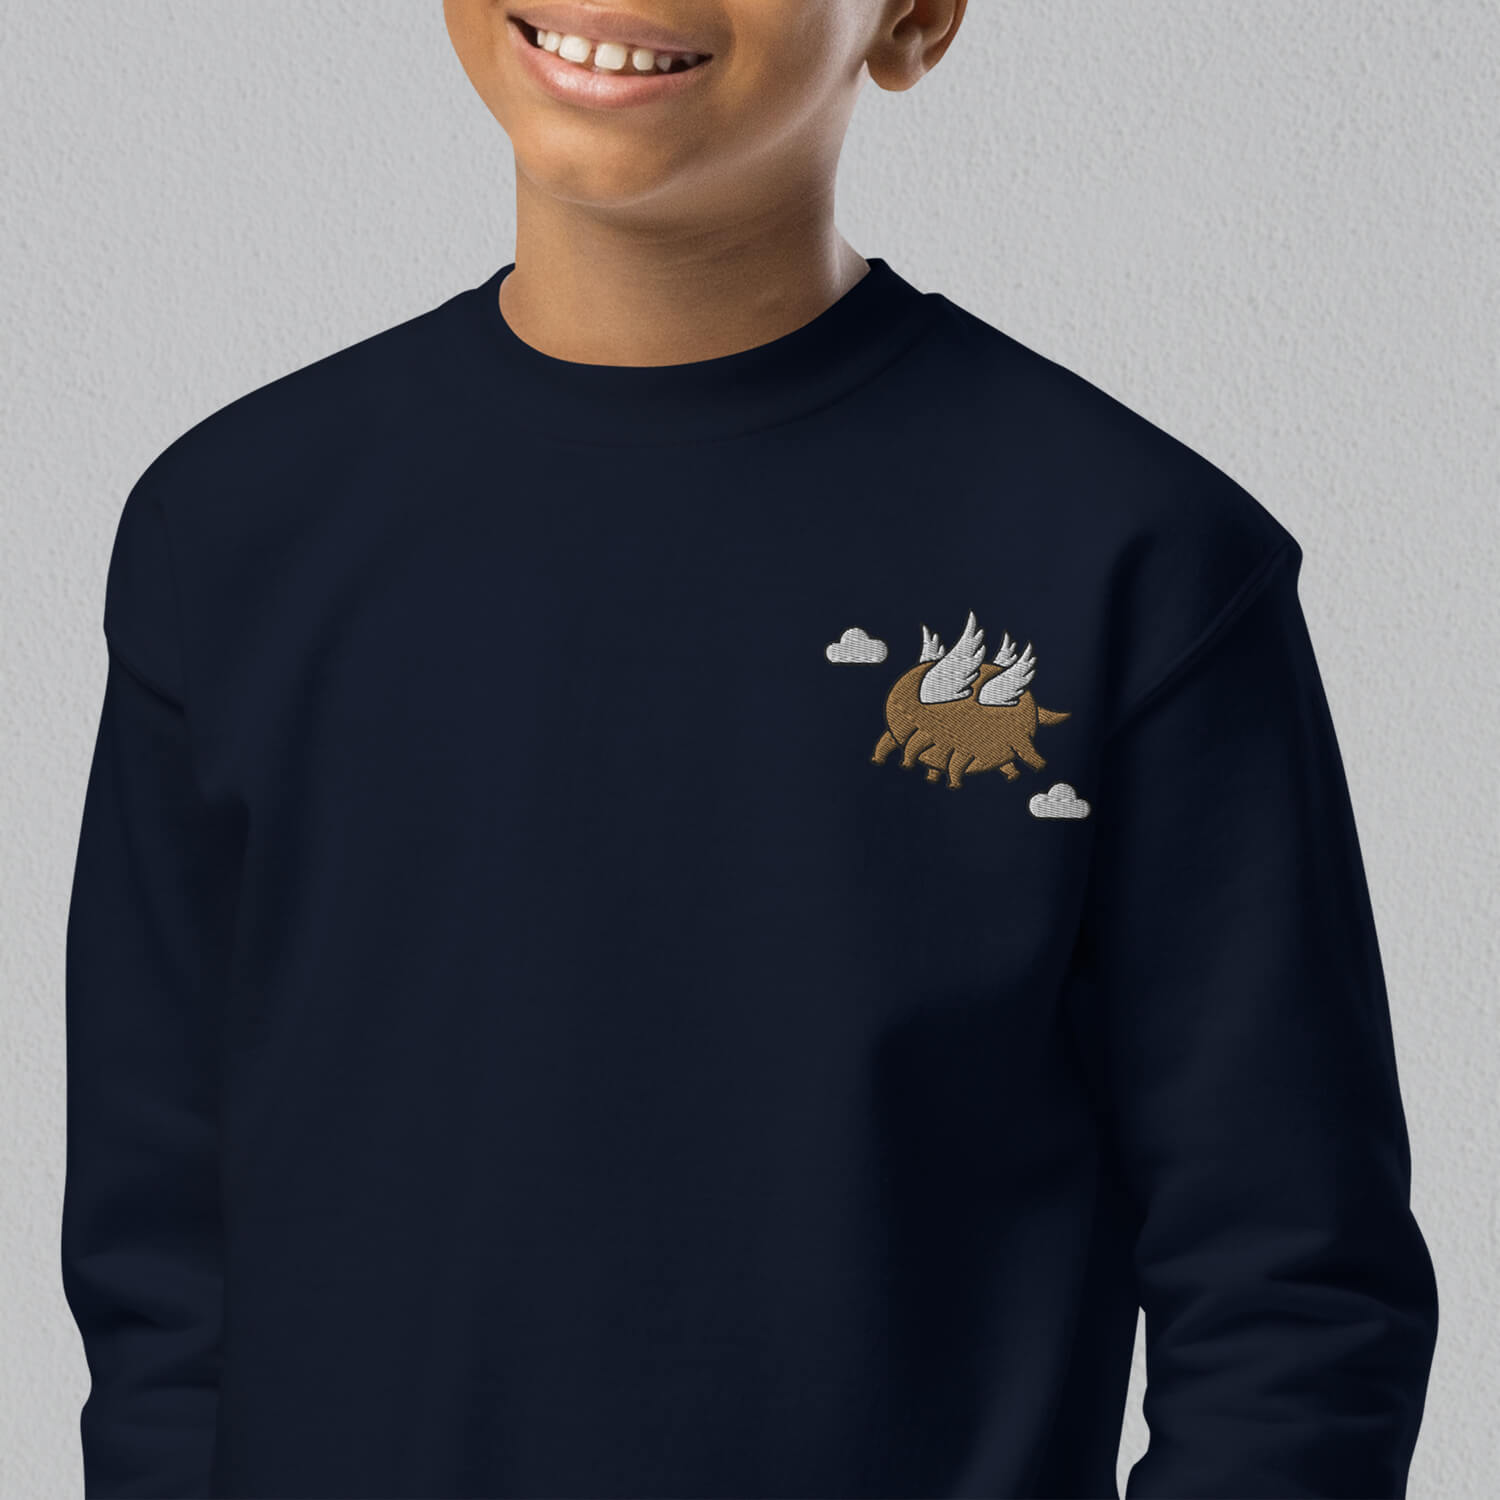 Hundun Embroidered Kids Sweatshirt - Ni De Mama Chinese Clothing